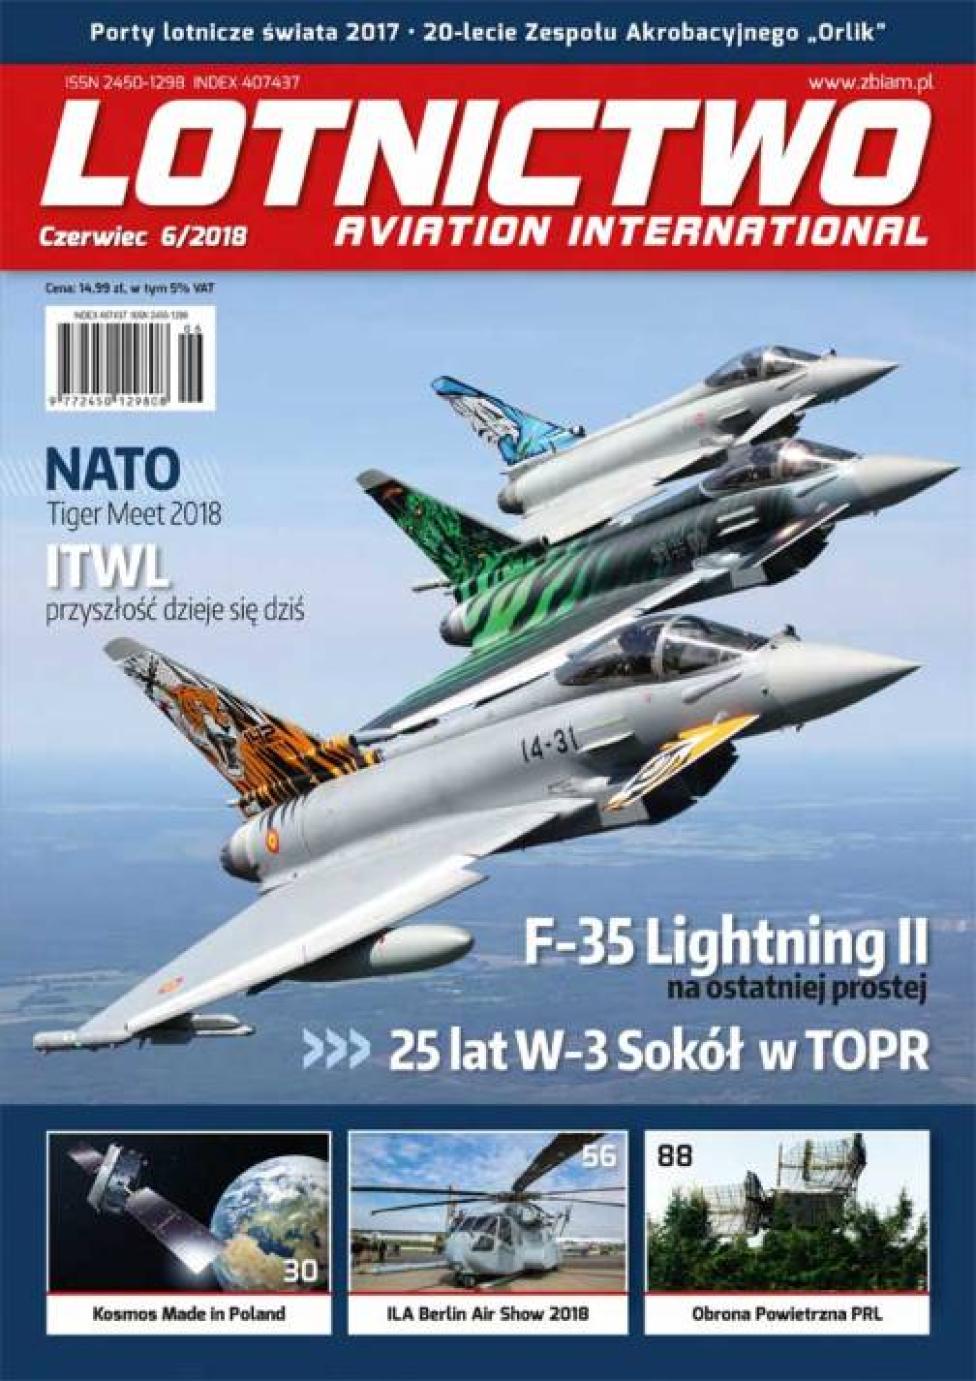 Lotnictwo Aviation International 6/2018